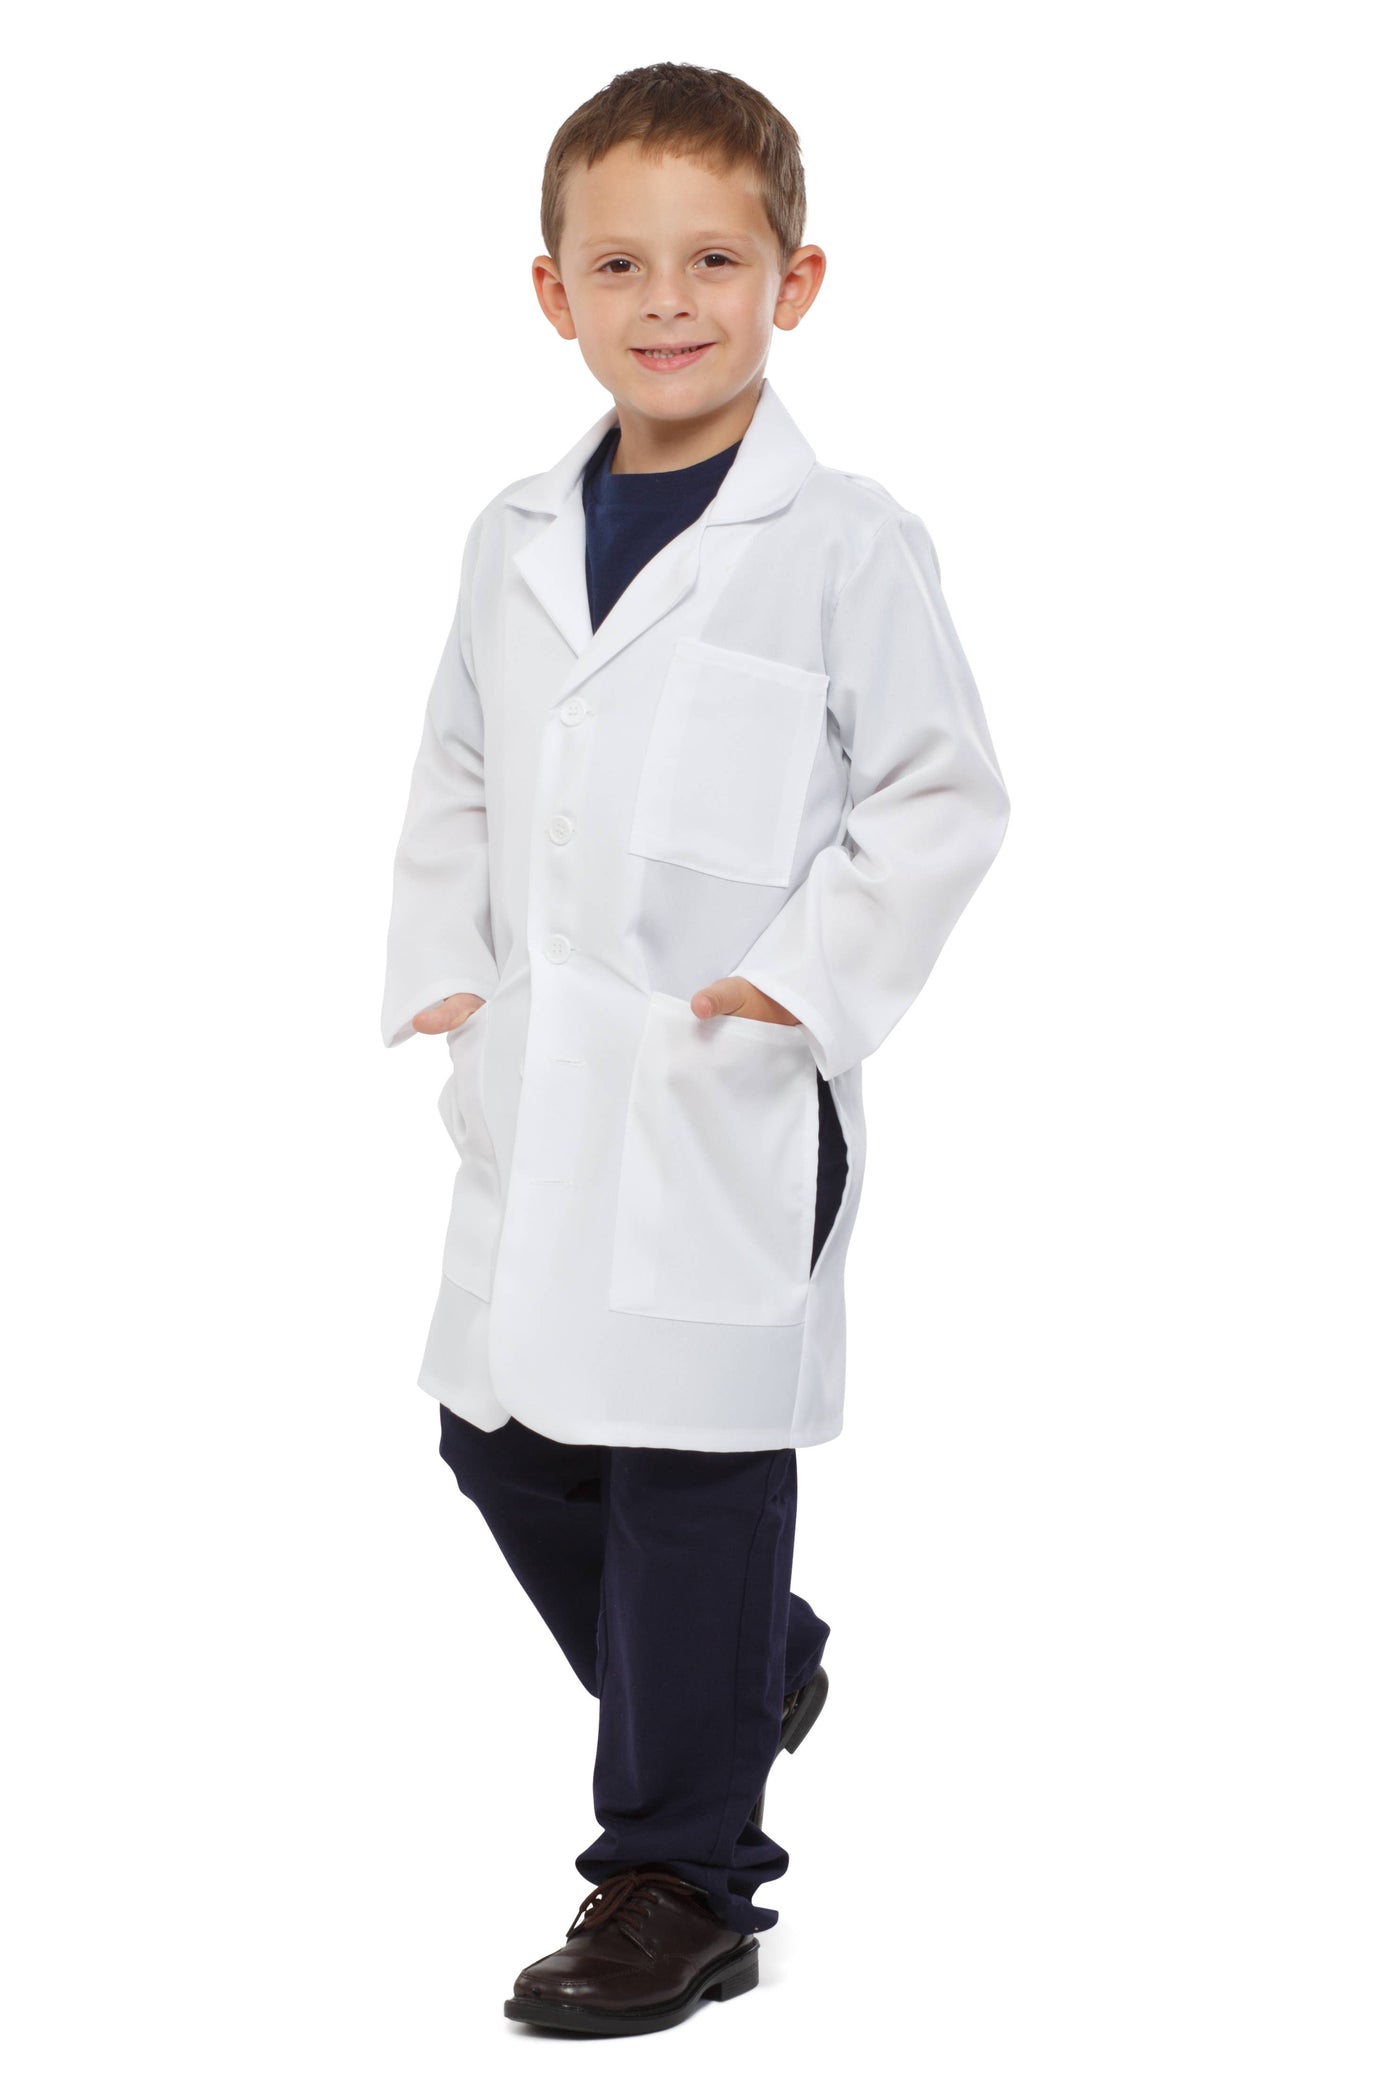 Lab Coat for Kids - T4